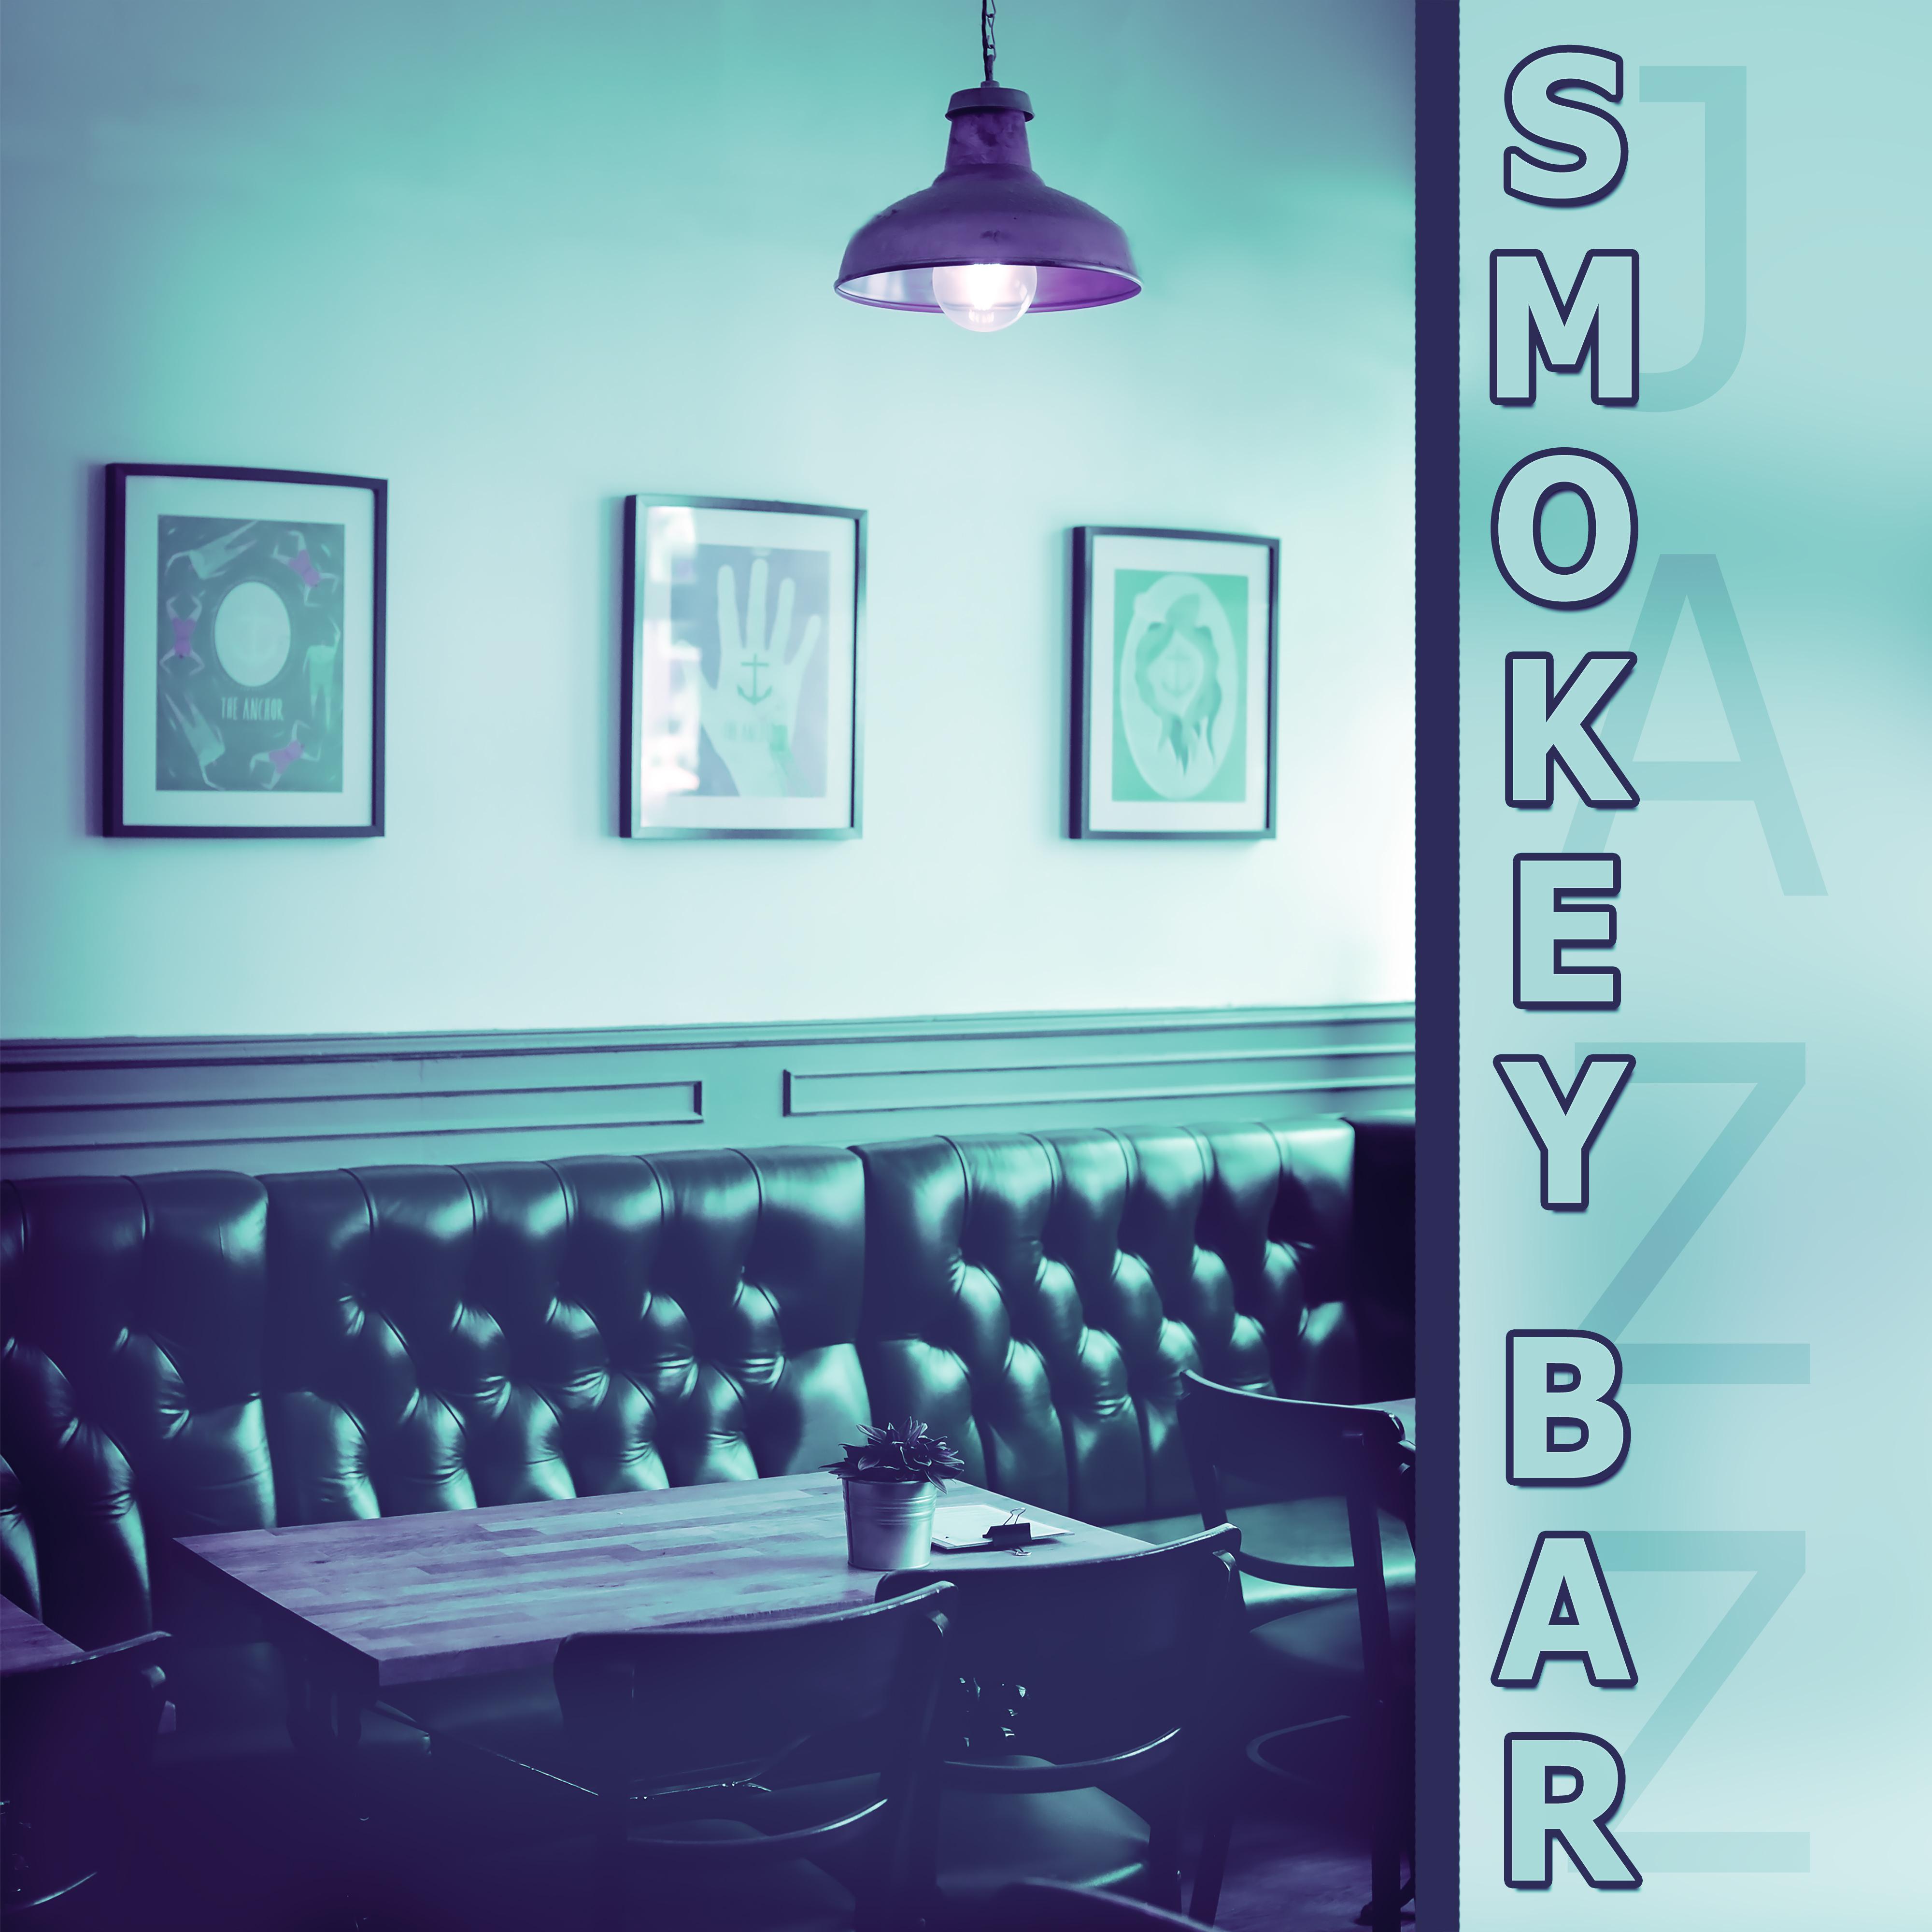 Smokey Bar – Best Collection of Jazz Music, Mellow Jazz, Instrumental Piano Sounds, Calming Background Jazz, Cocktail Bar